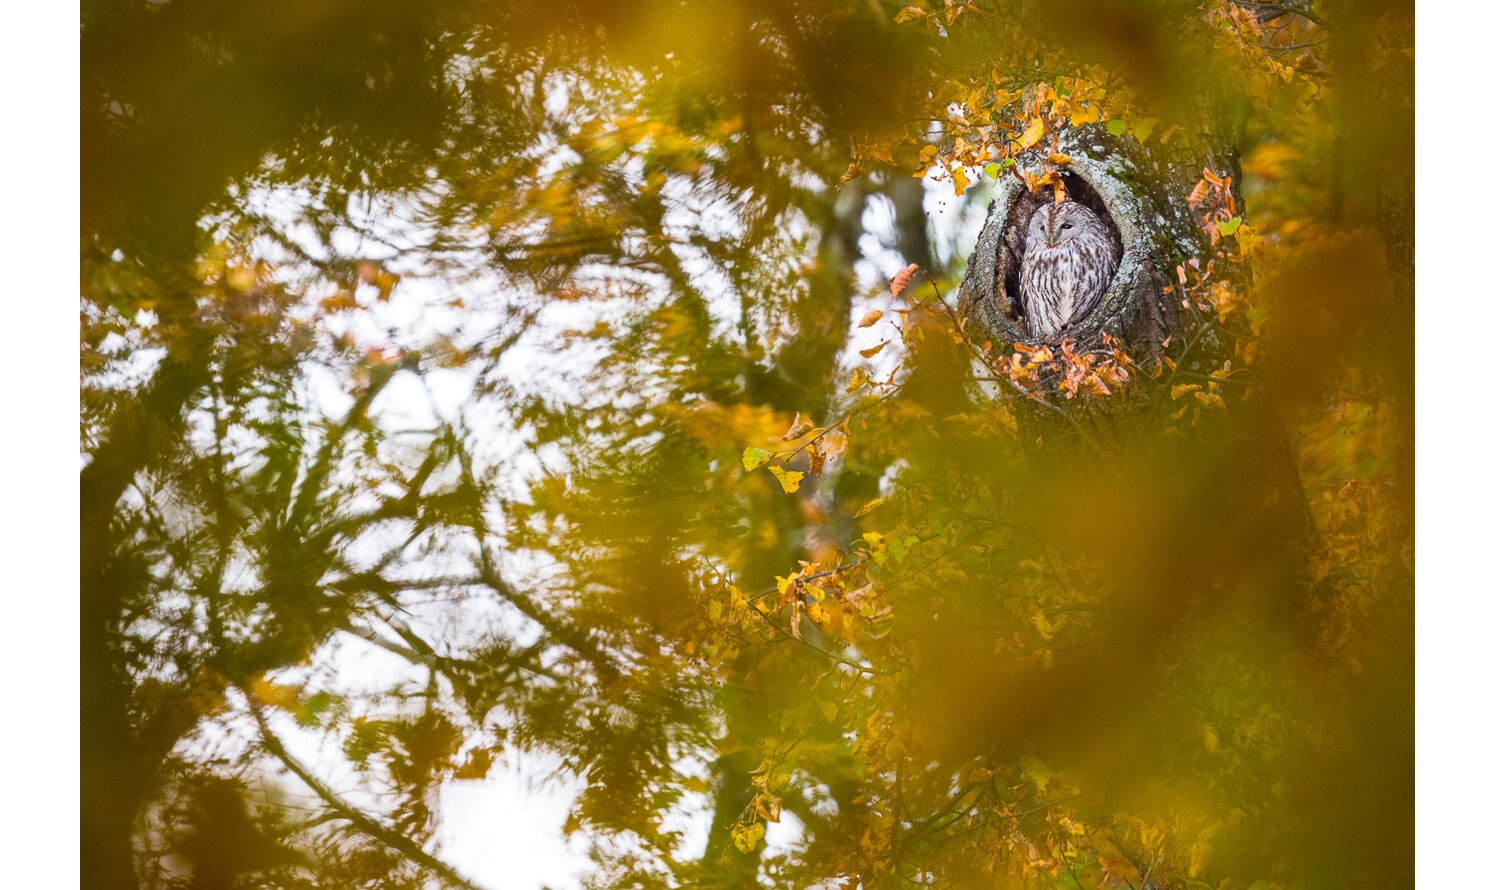  Tawny owl during golden autumn 